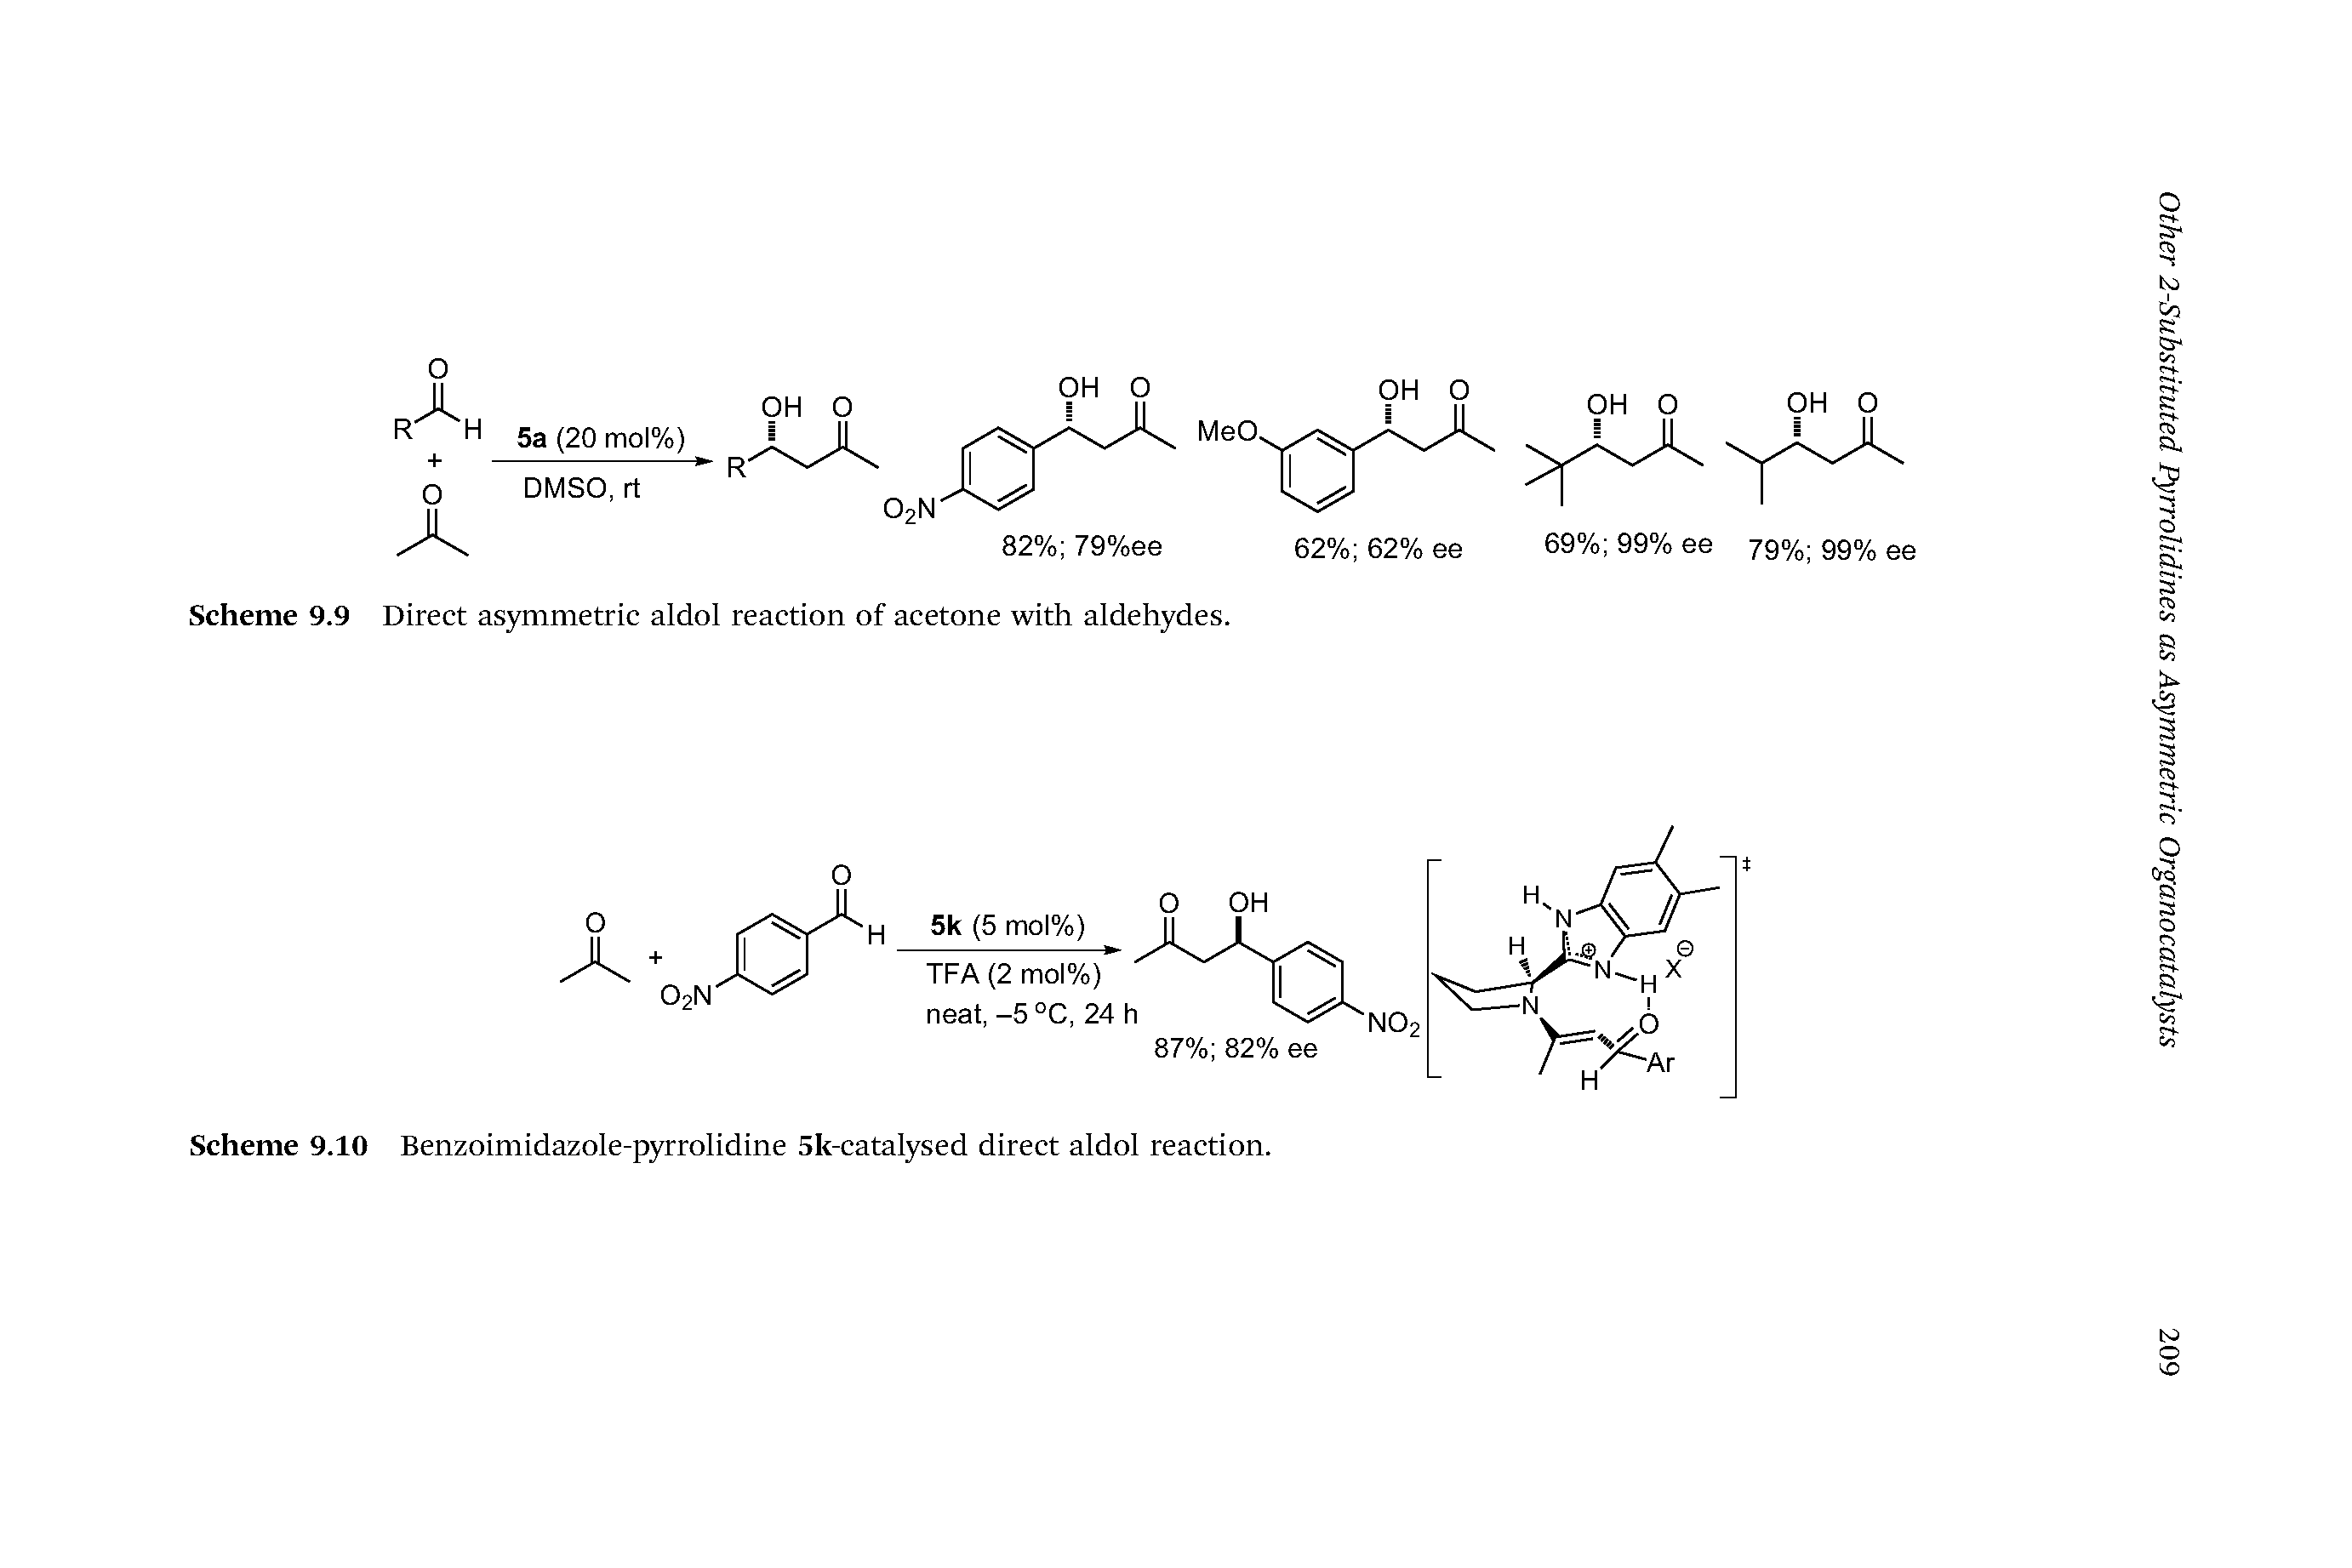 Scheme 9.9 Direct asymmetric aldol reaction of acetone with aldehydes.